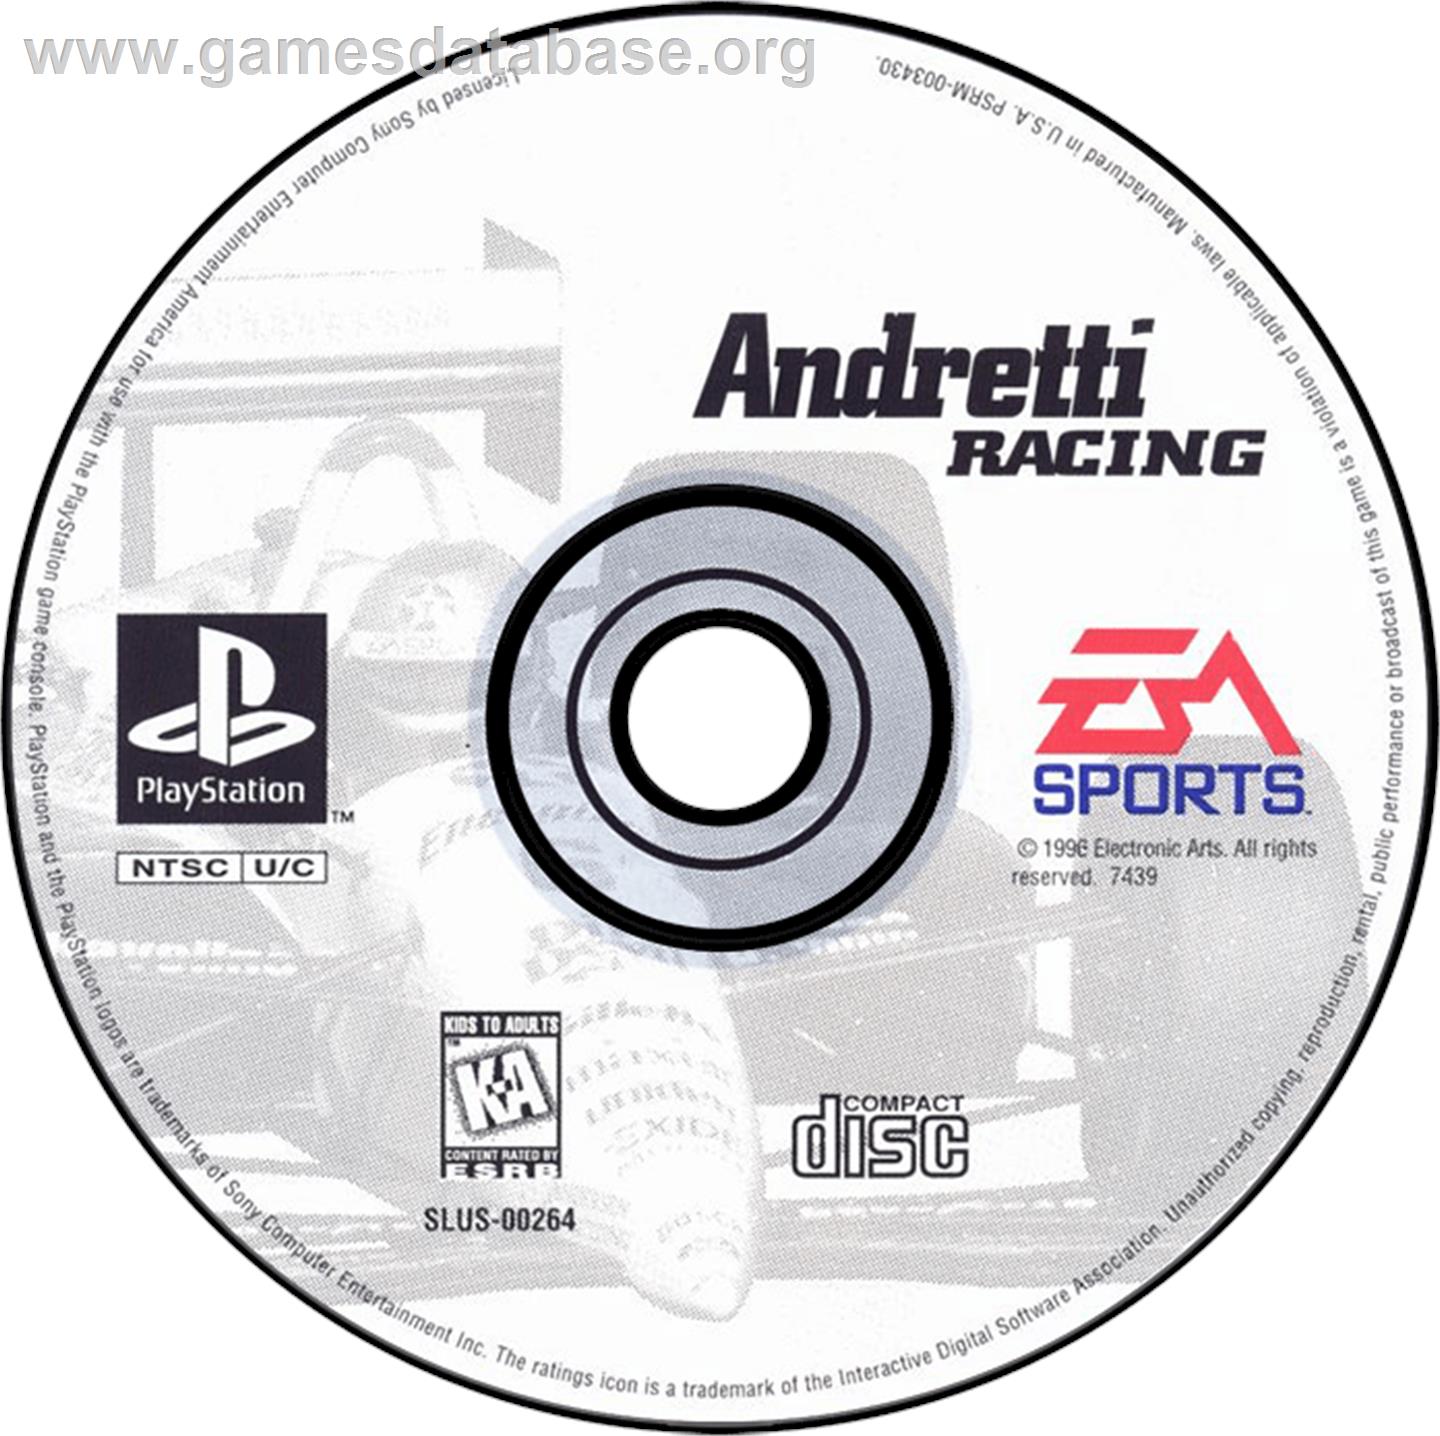 Andretti Racing - Sony Playstation - Artwork - Disc